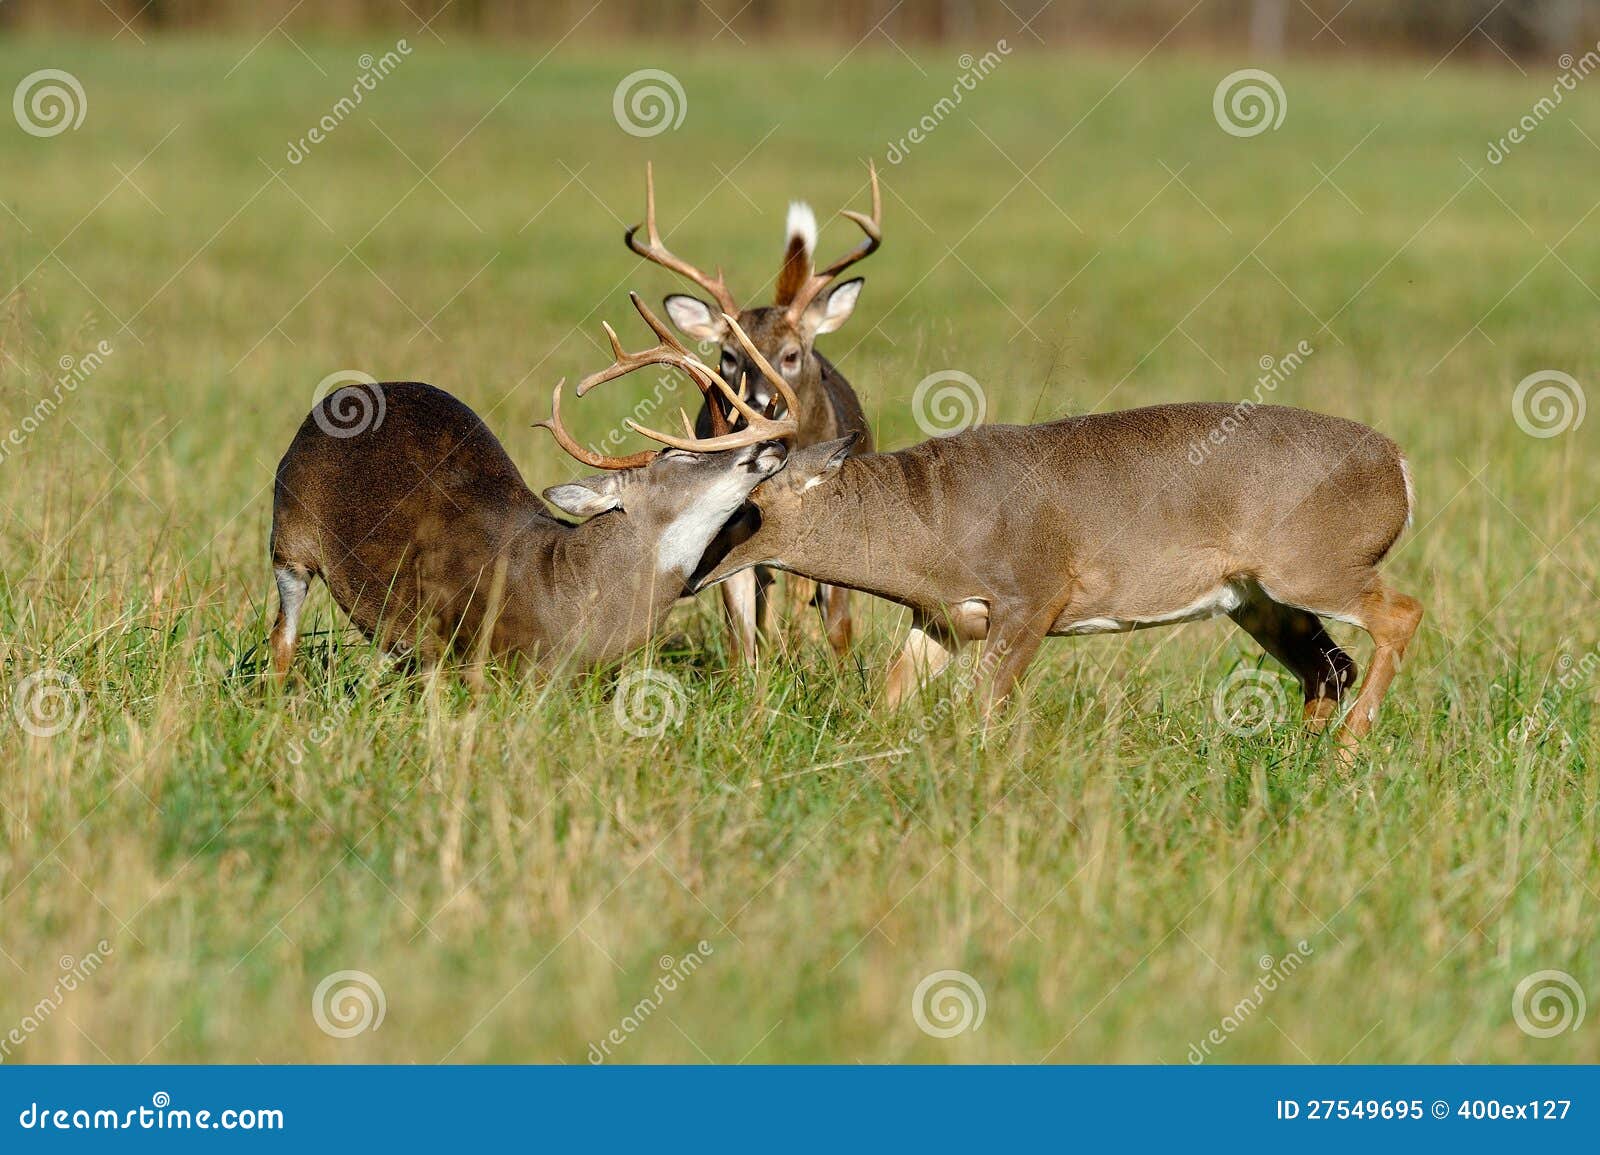 Bucks fighting stock image. Image of outdoors, fighting - 27549695